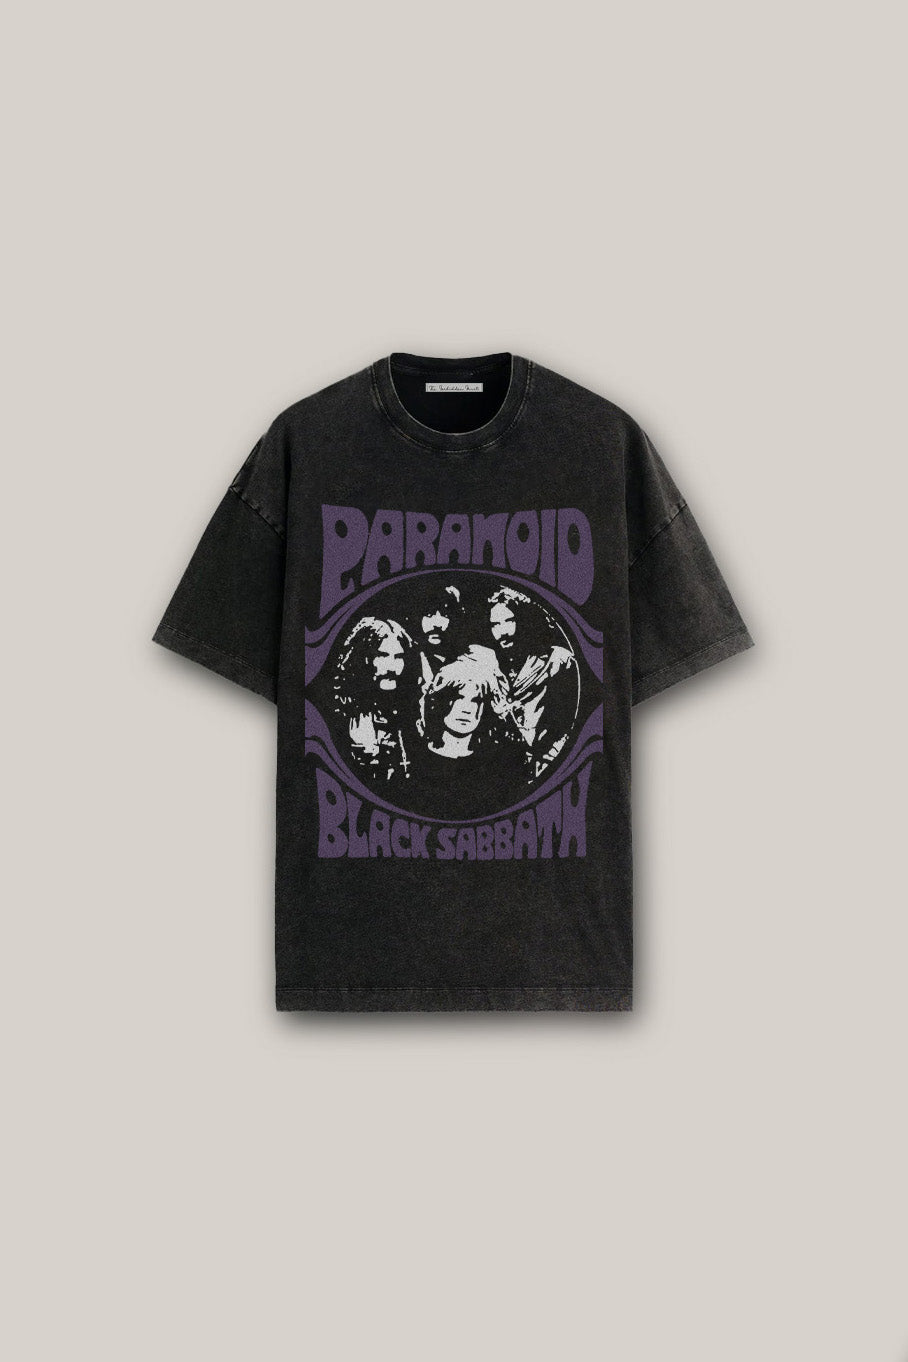 Black Sabbath 'Paranoid' Vintage T-Shirt